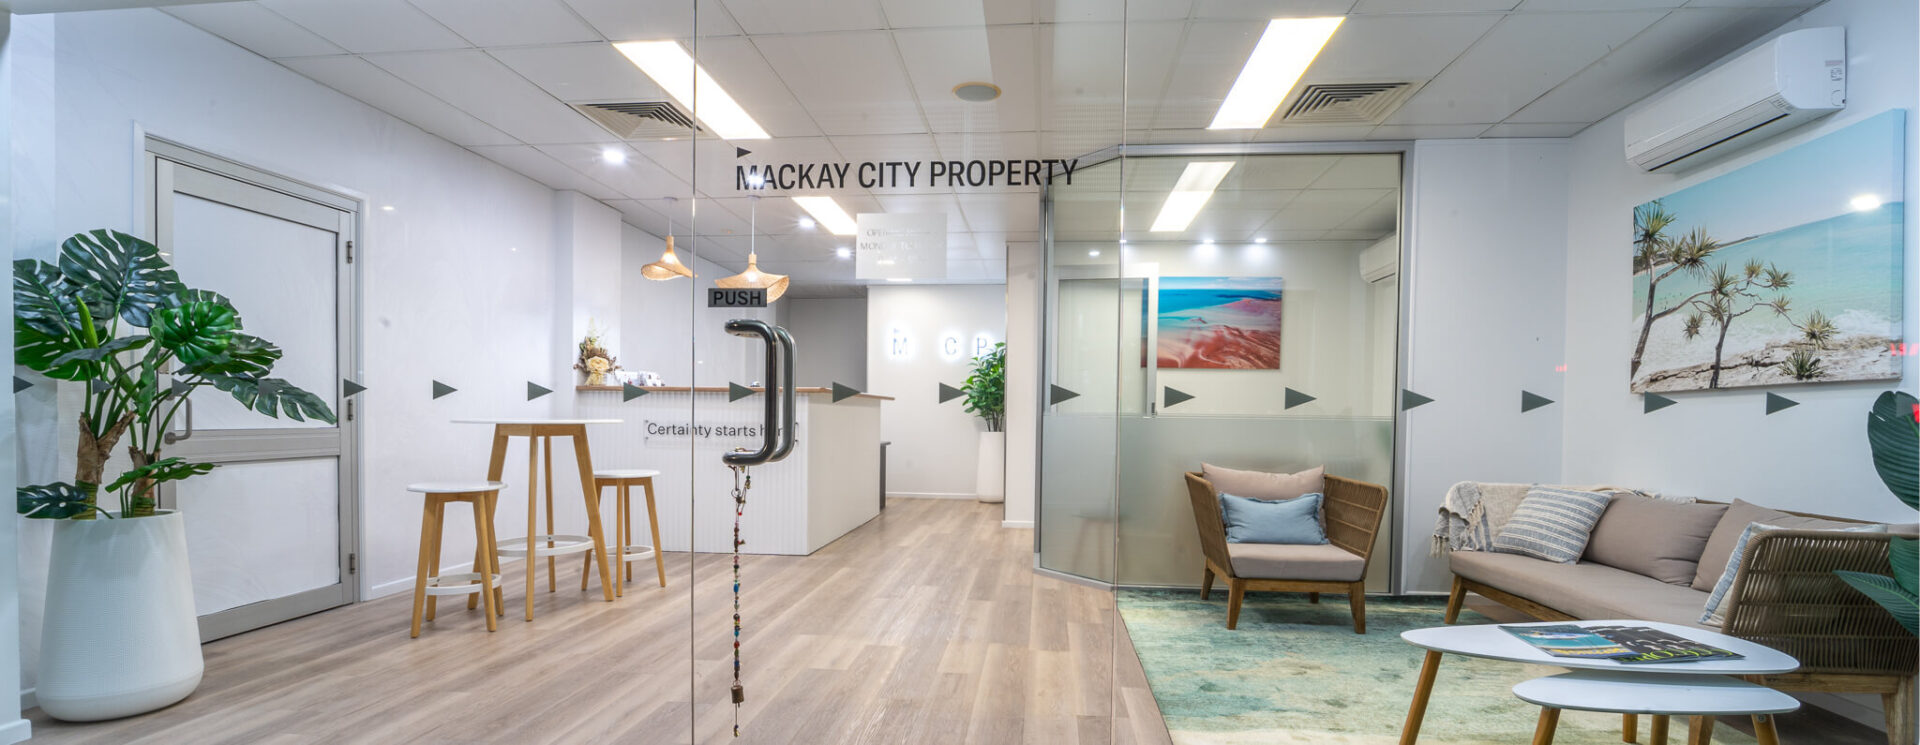 Mackay City Property Office